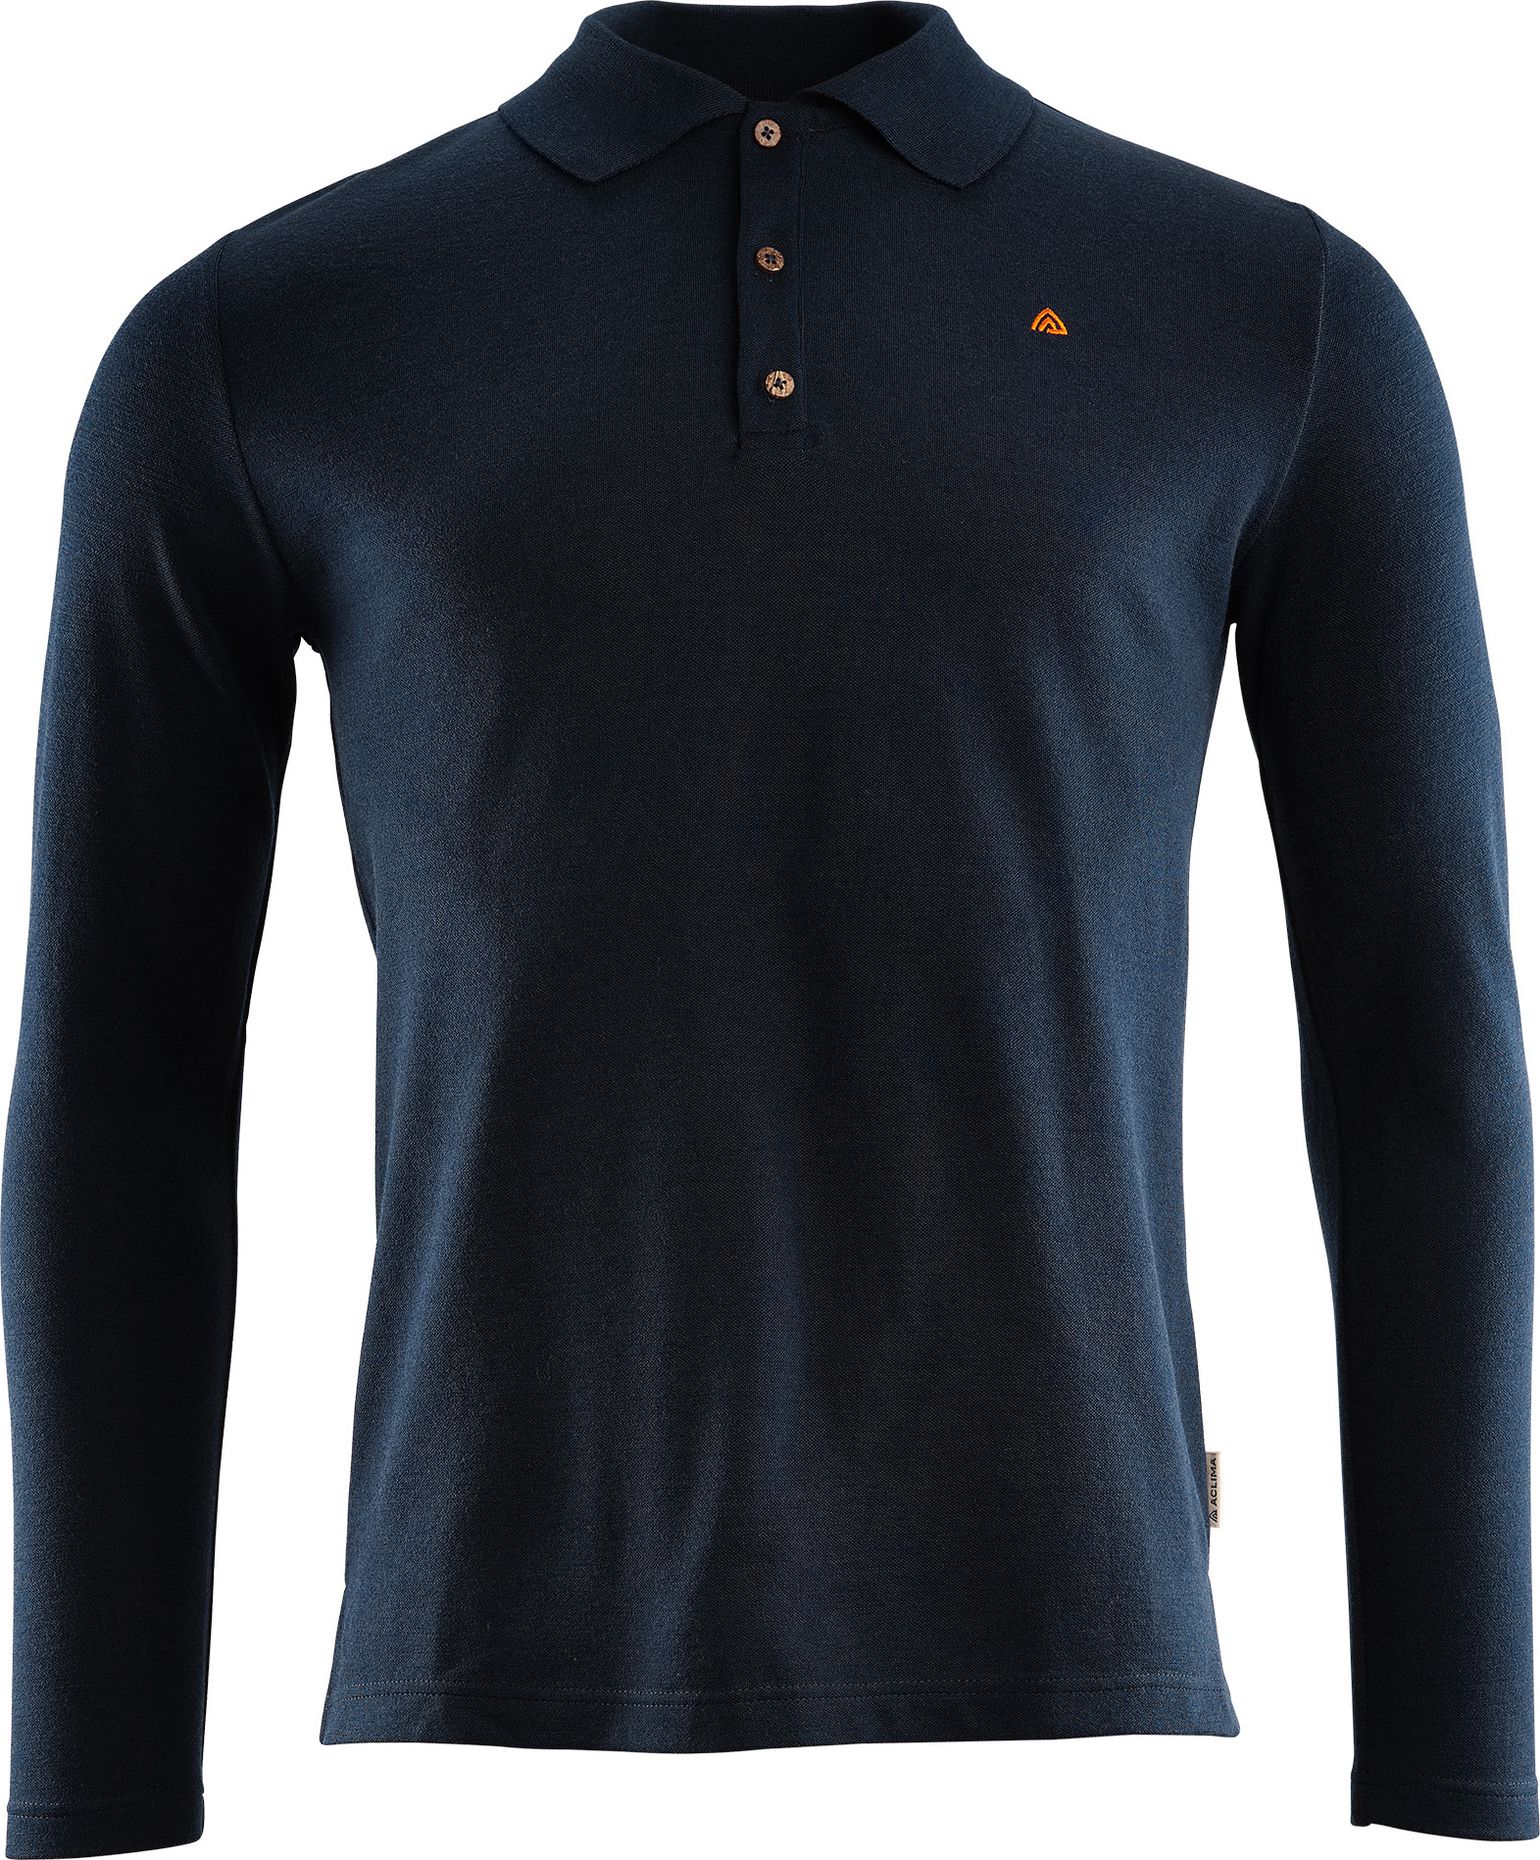 Men's LeisureWool Pique Shirt Long Sleeve Navy Blazer